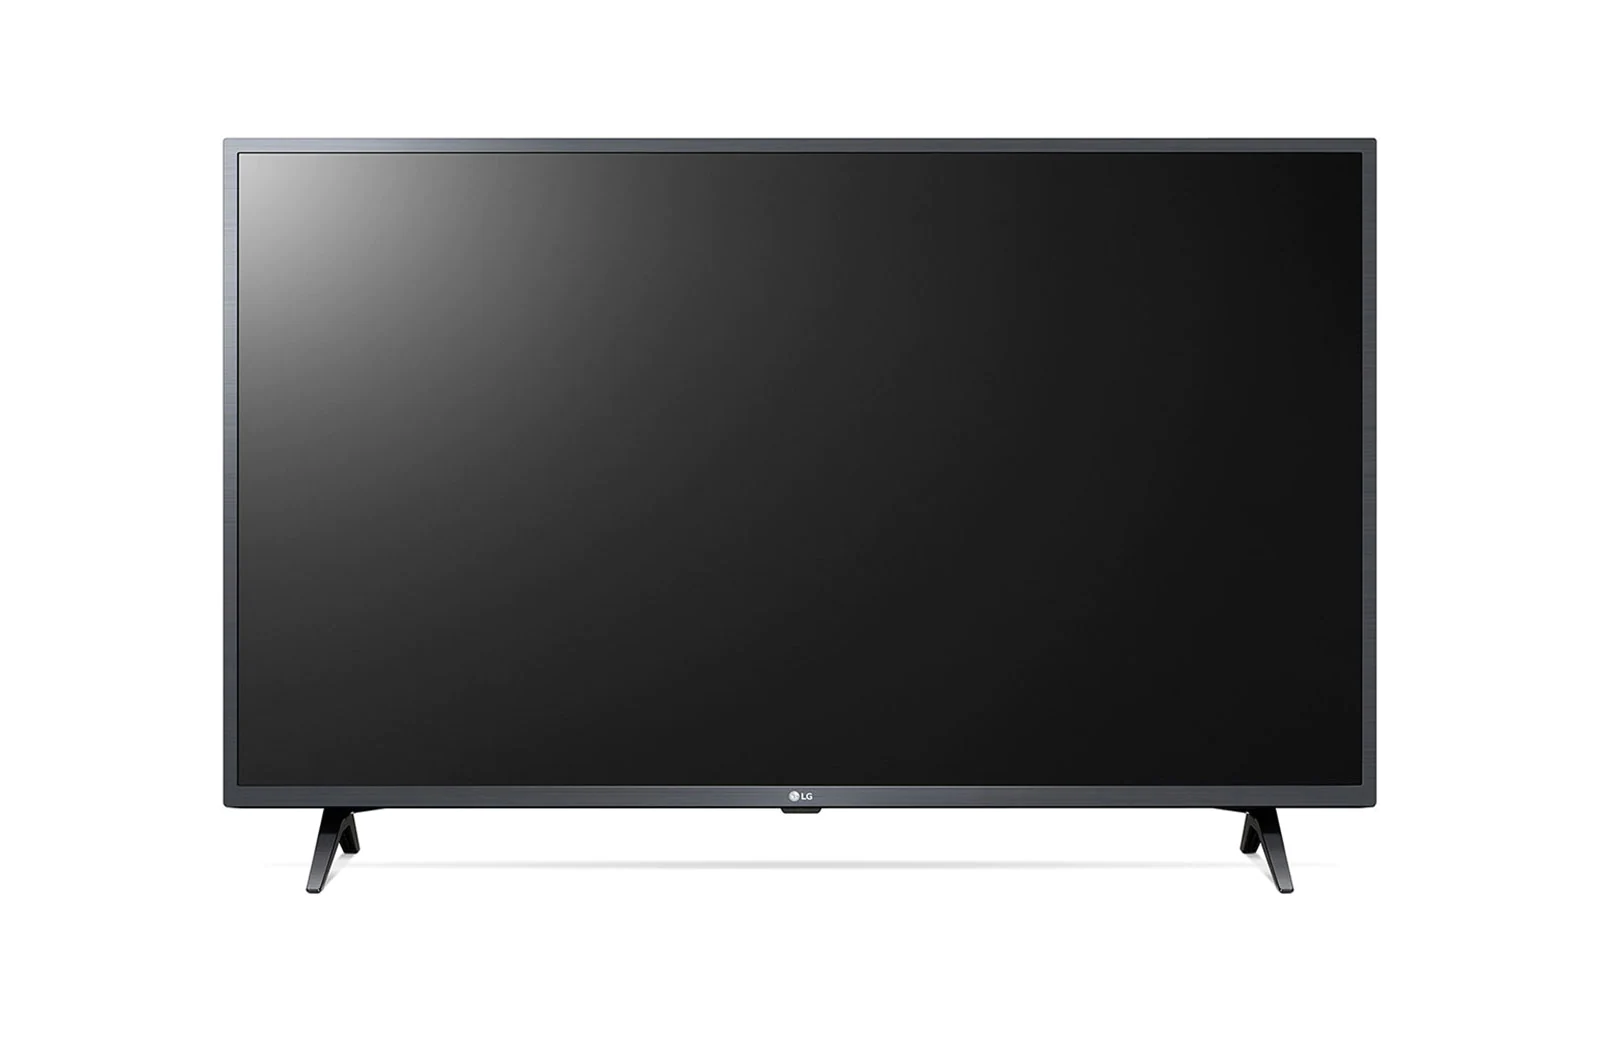 LG LED Smart TV 43 Inch Series Full HDR Smart LED TV - 43LM6370 1